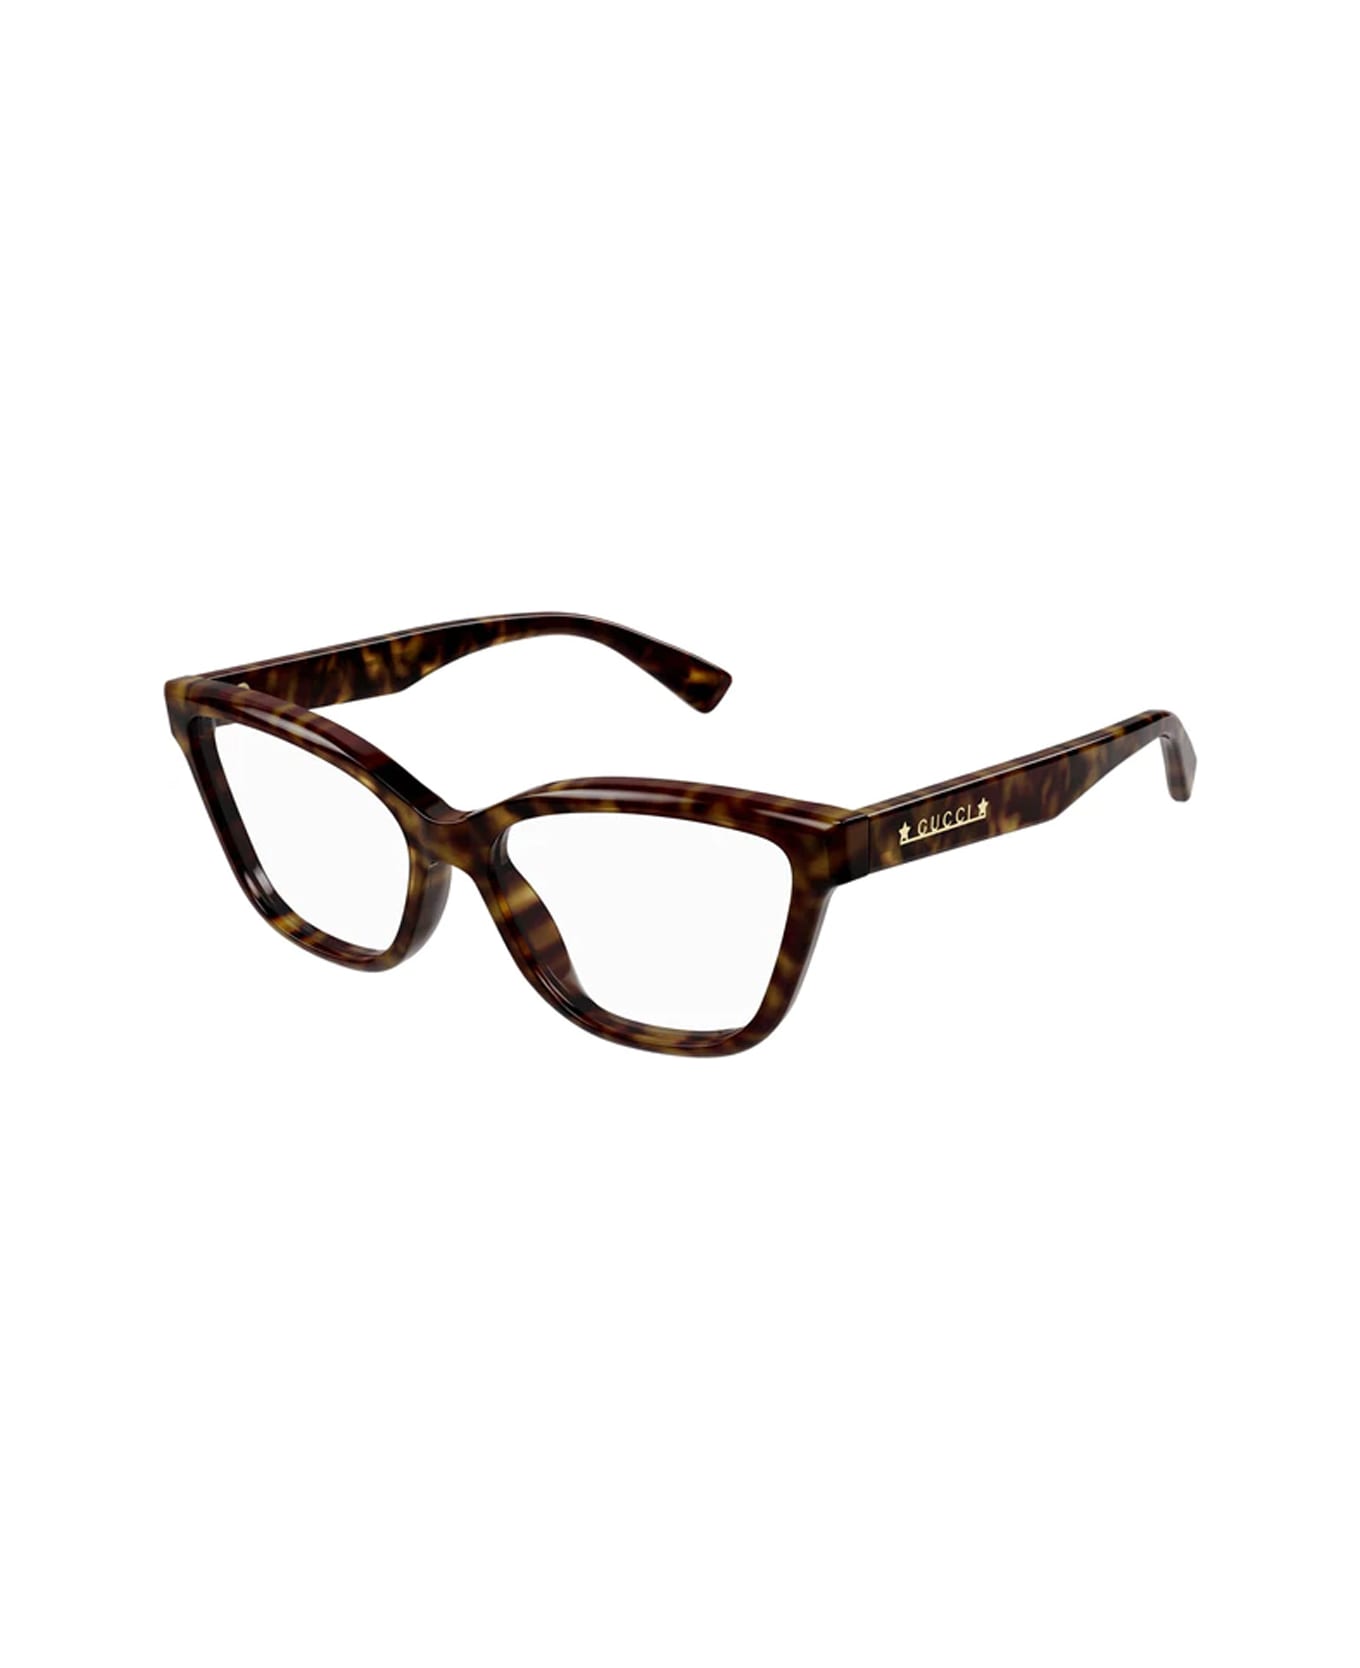 Gucci Eyewear Gucci Gg1589o Linea Lettering Glasses - Marrone アイウェア